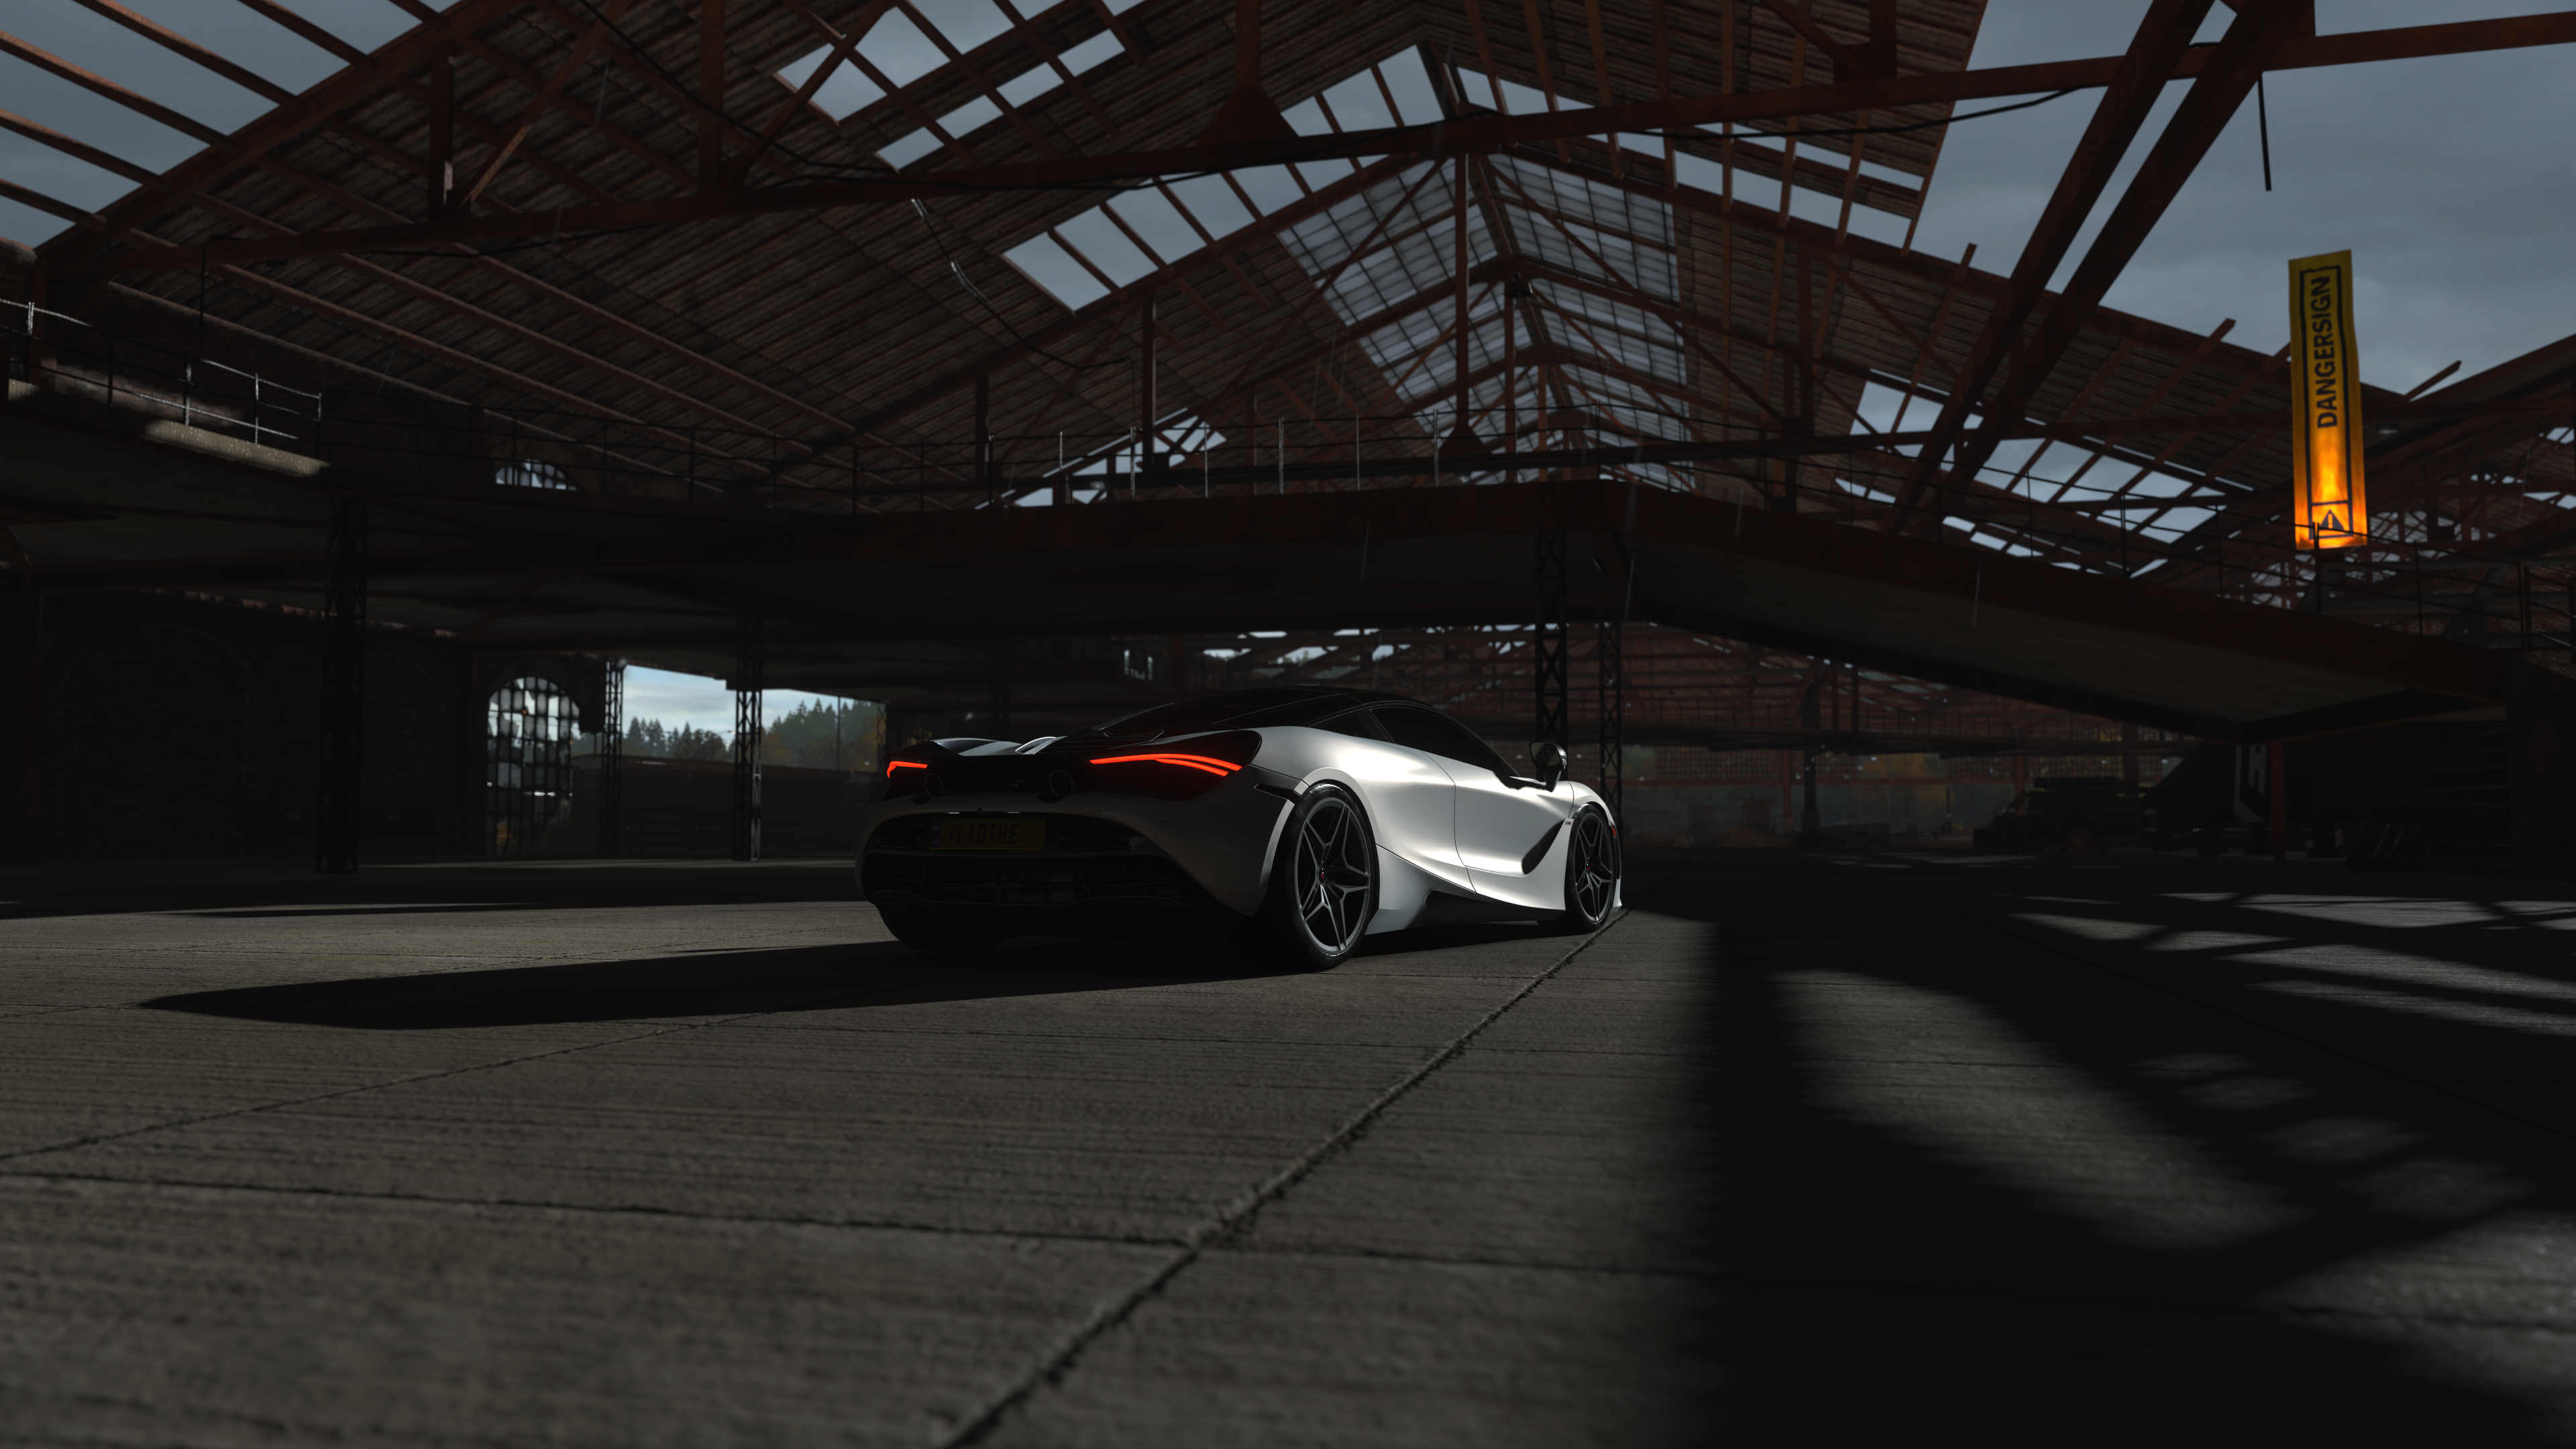 General 3840x2160 Forza Forza Horizon 4 video games screen shot McLaren 720S McLaren British cars PlaygroundGames Xbox Game Studios Turn 10 Studios